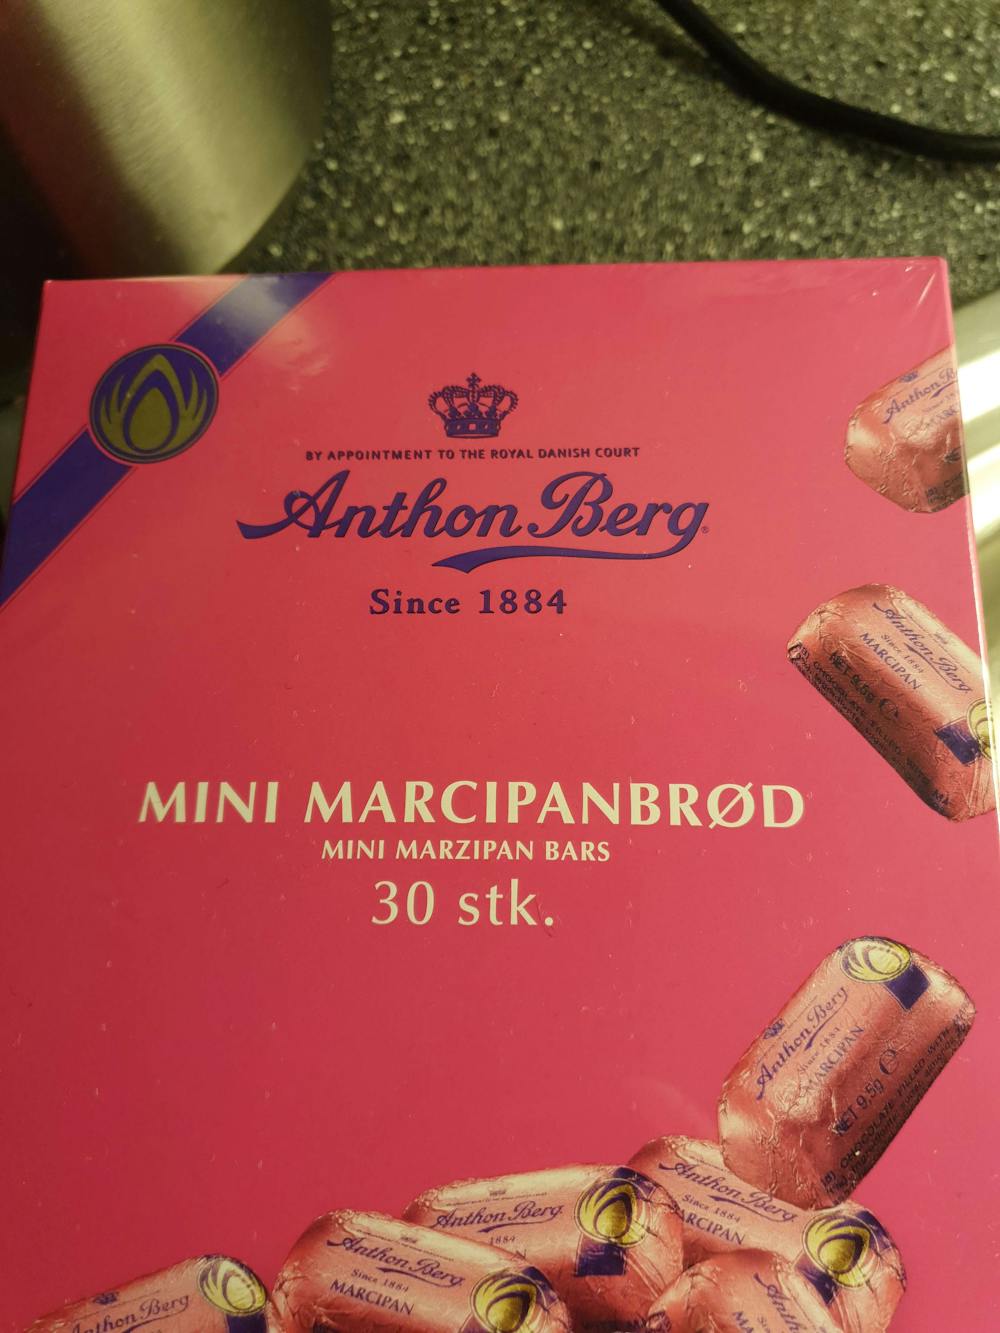 Mini marcipanbrød, Anthon Berg